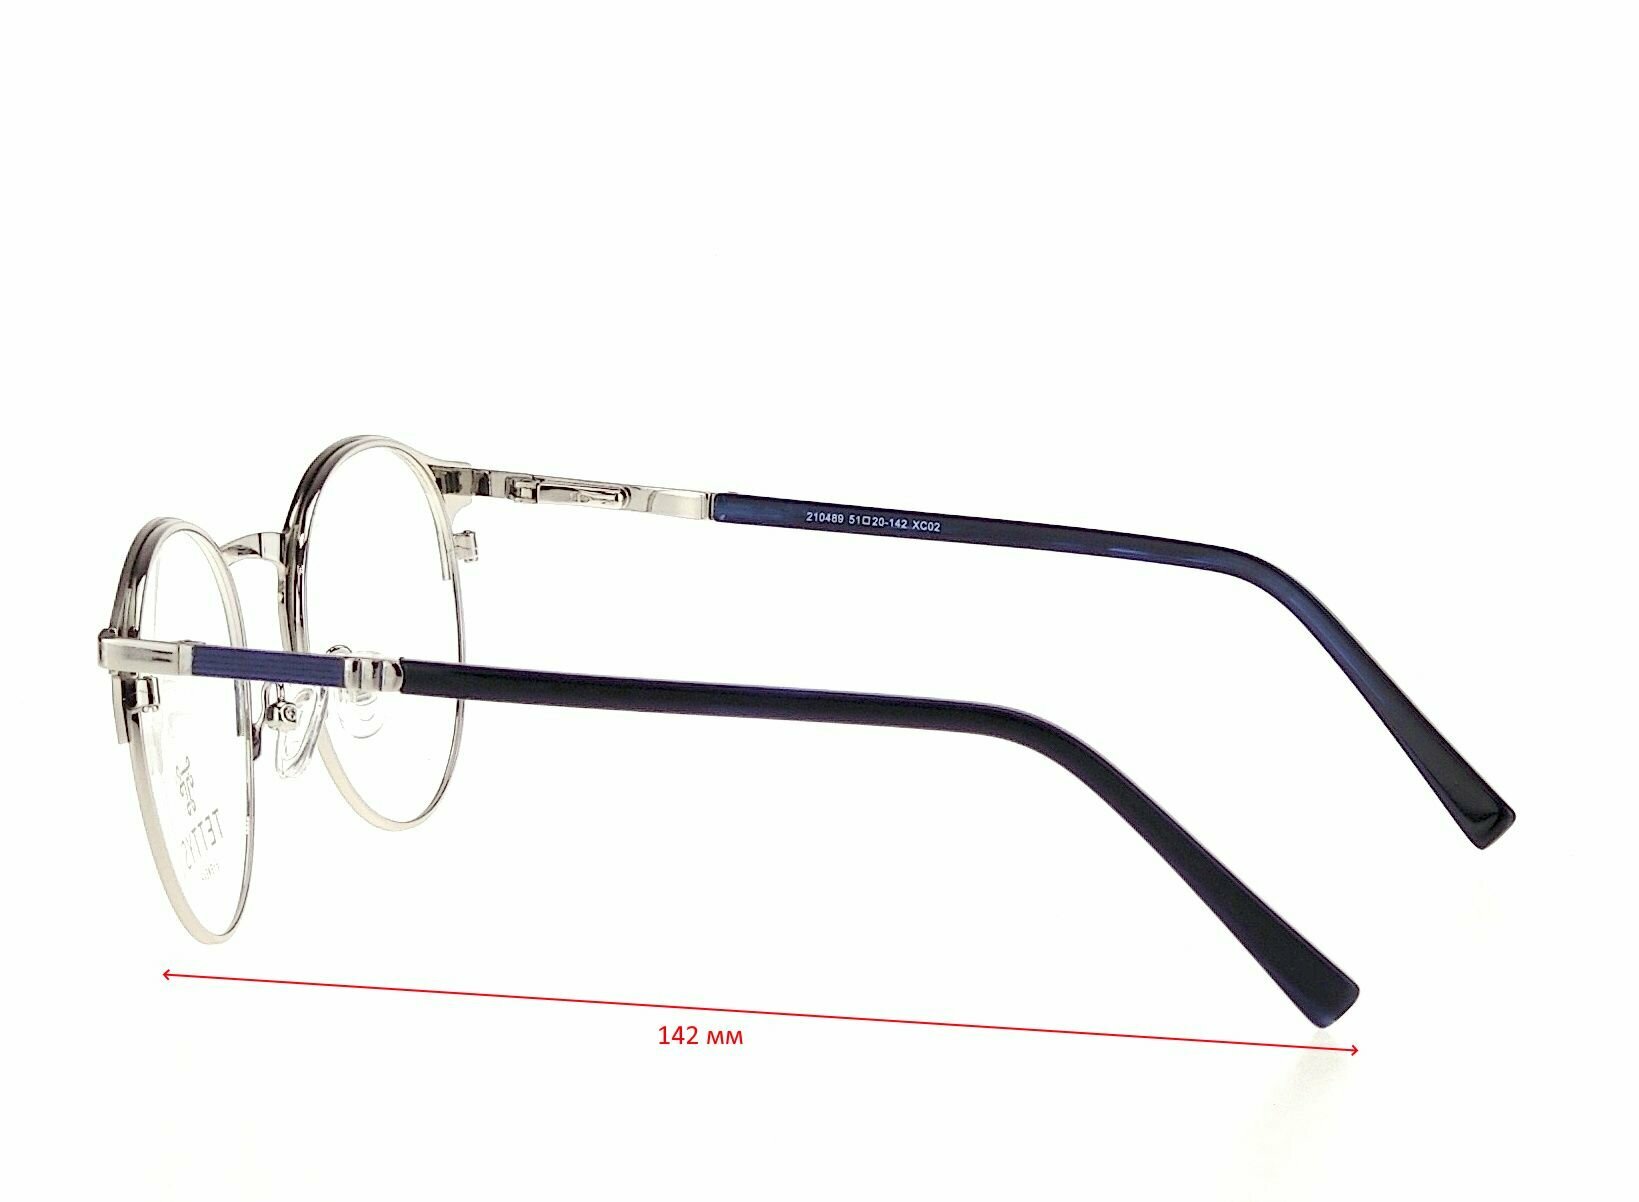 Фотохромные очки с футляром на магните TETTYS EYEWEAR мод. 210489 Цвет 2 с линзами ROMEO 1.56 FAST Photocolor BROWN, HMC+ -4.50 РЦ 60-62